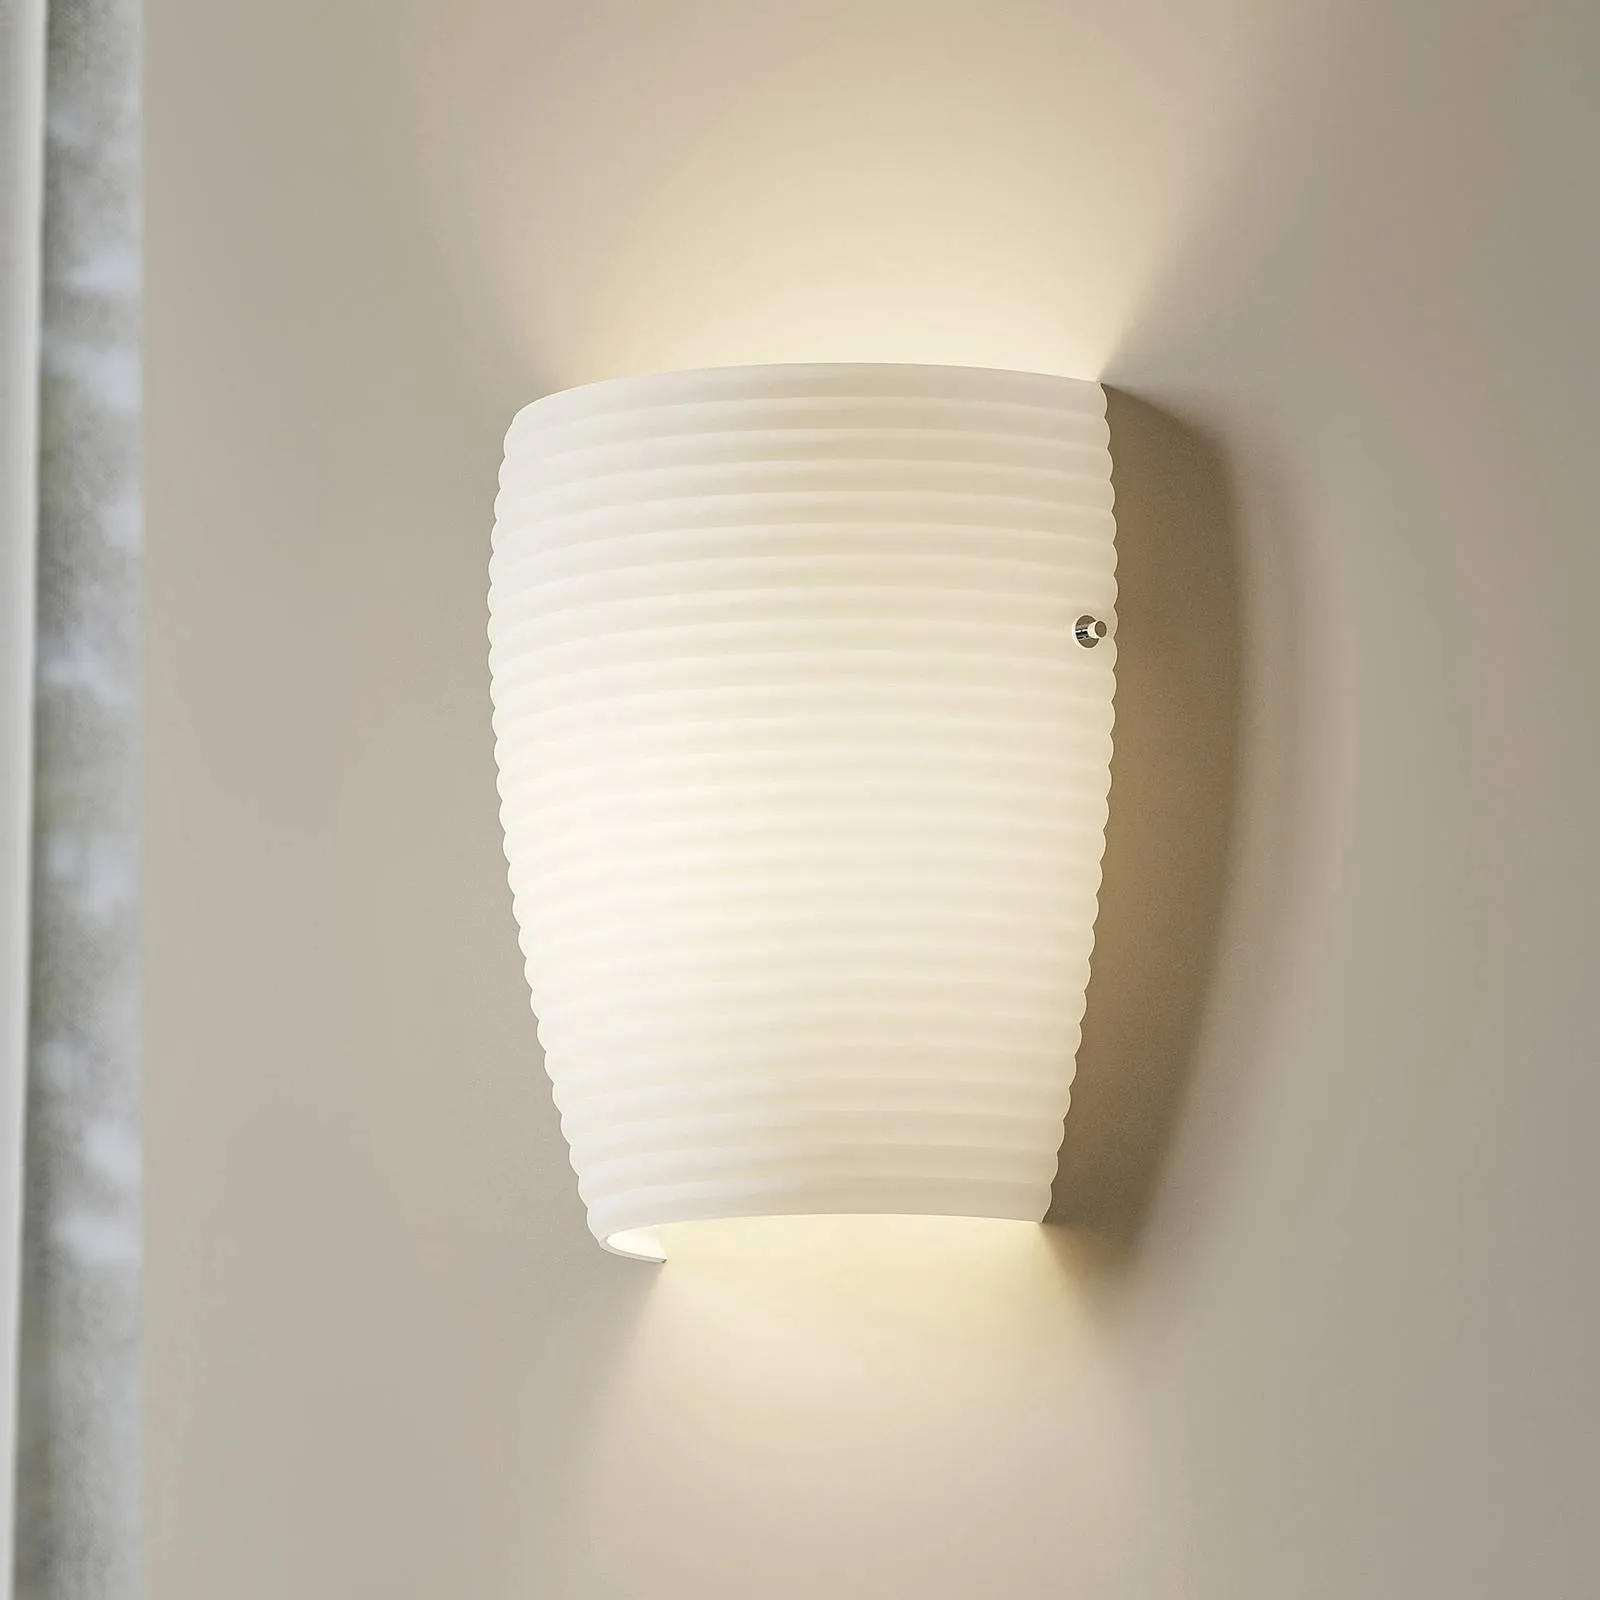 Lucande Vera wall light, white glass lampshade